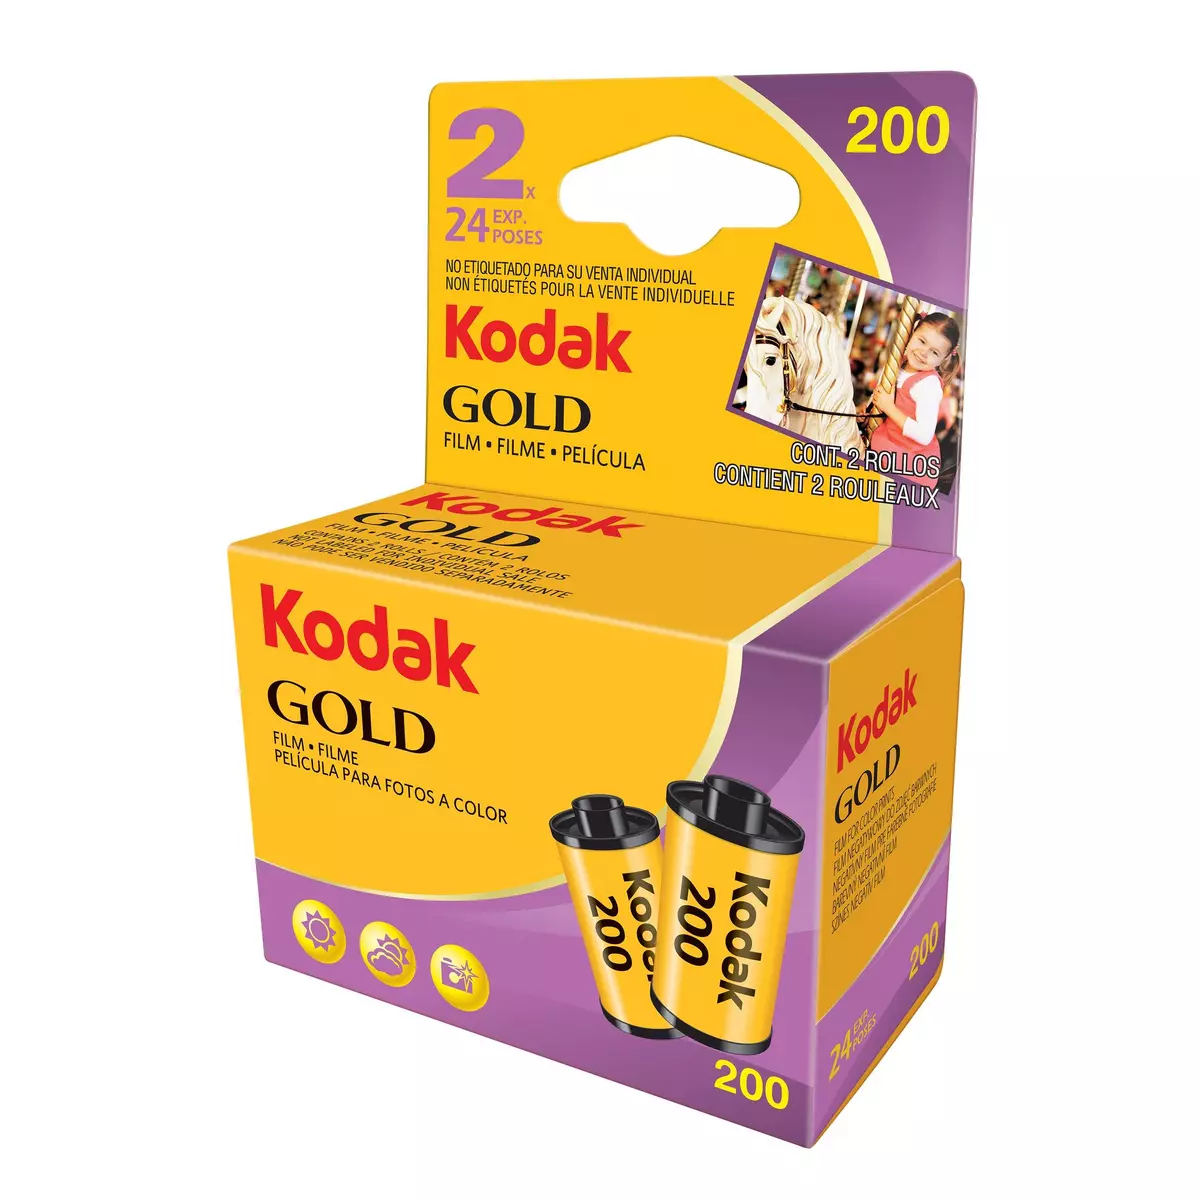 KODAK GOLD - Pack de Pellicules 2 x 24 poses - 200 ASA pas cher 